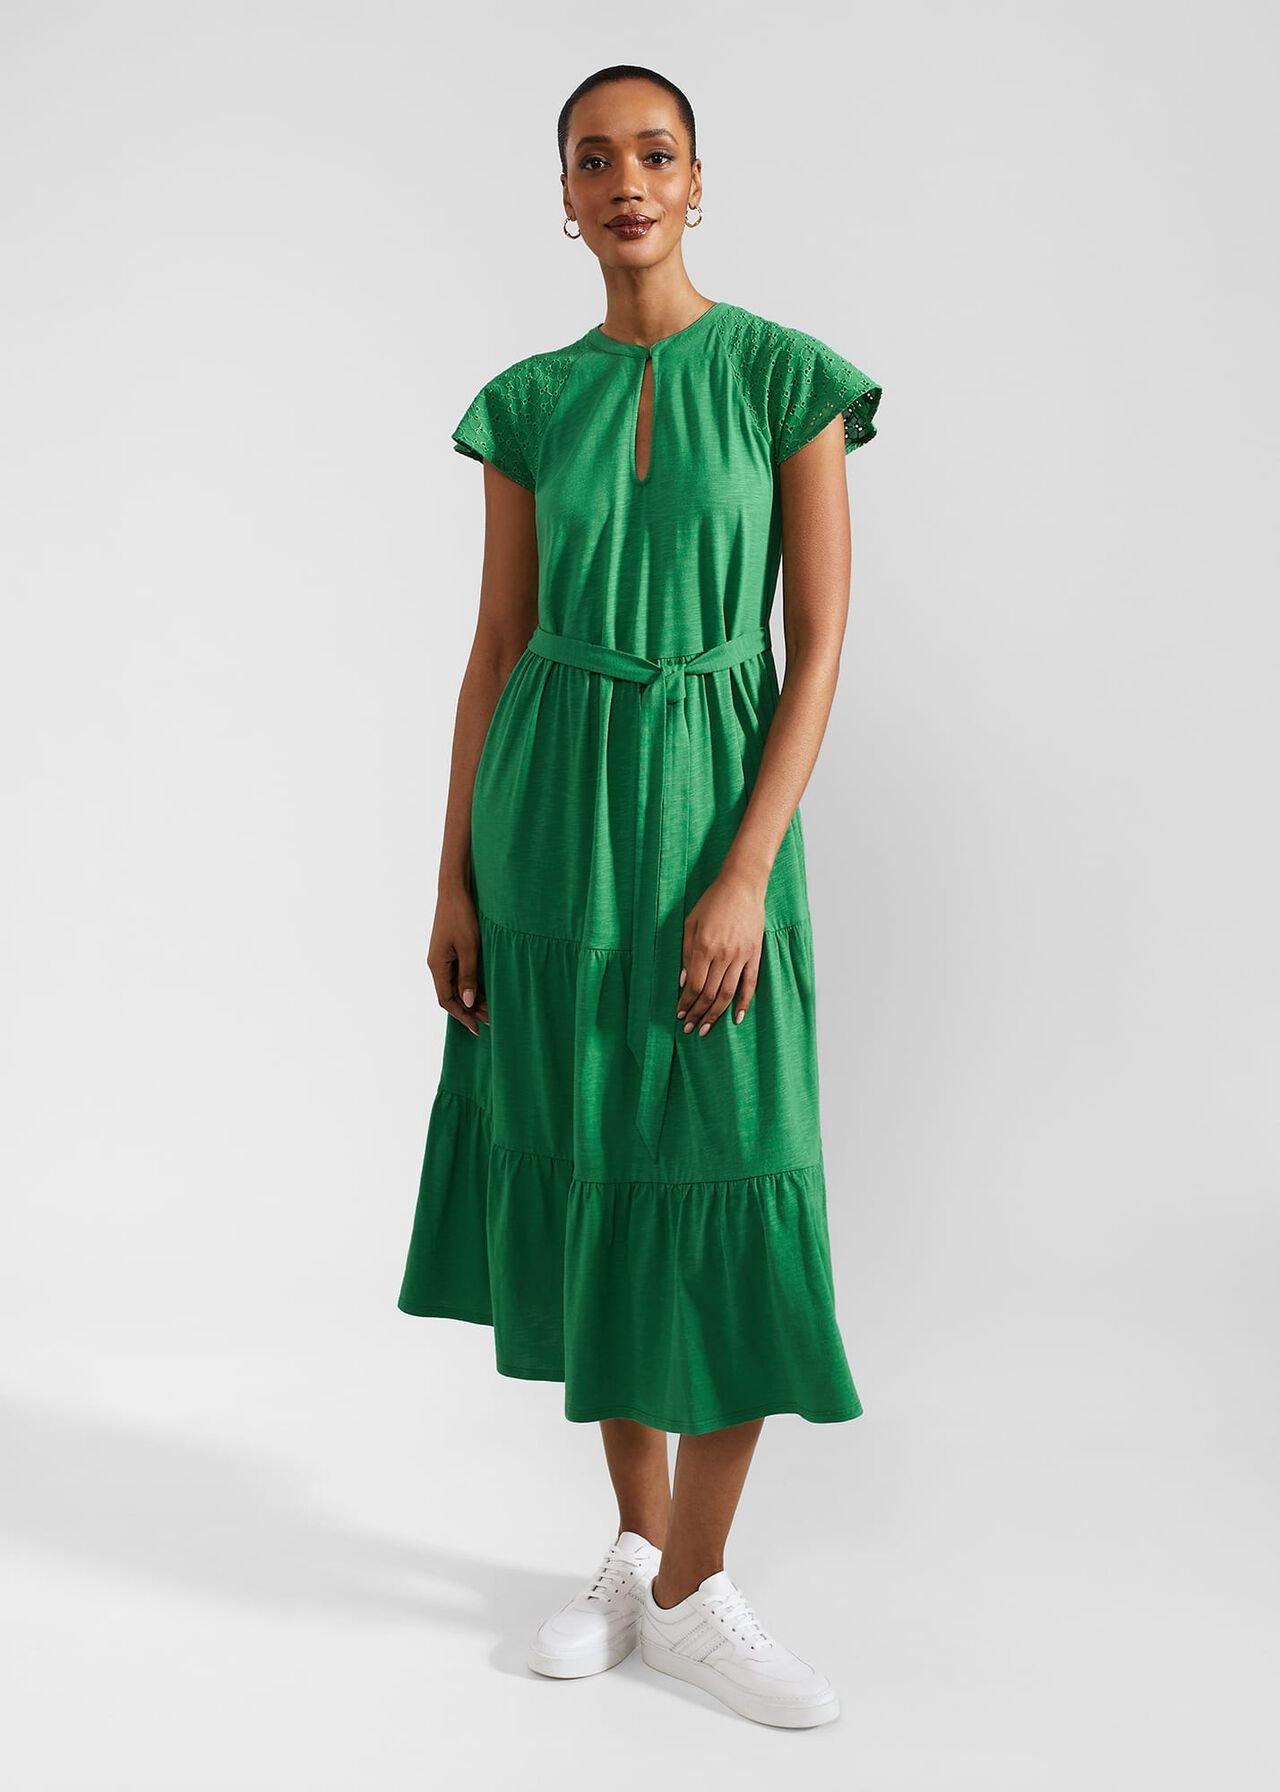 Brodie Jersey Dress, Green, hi-res